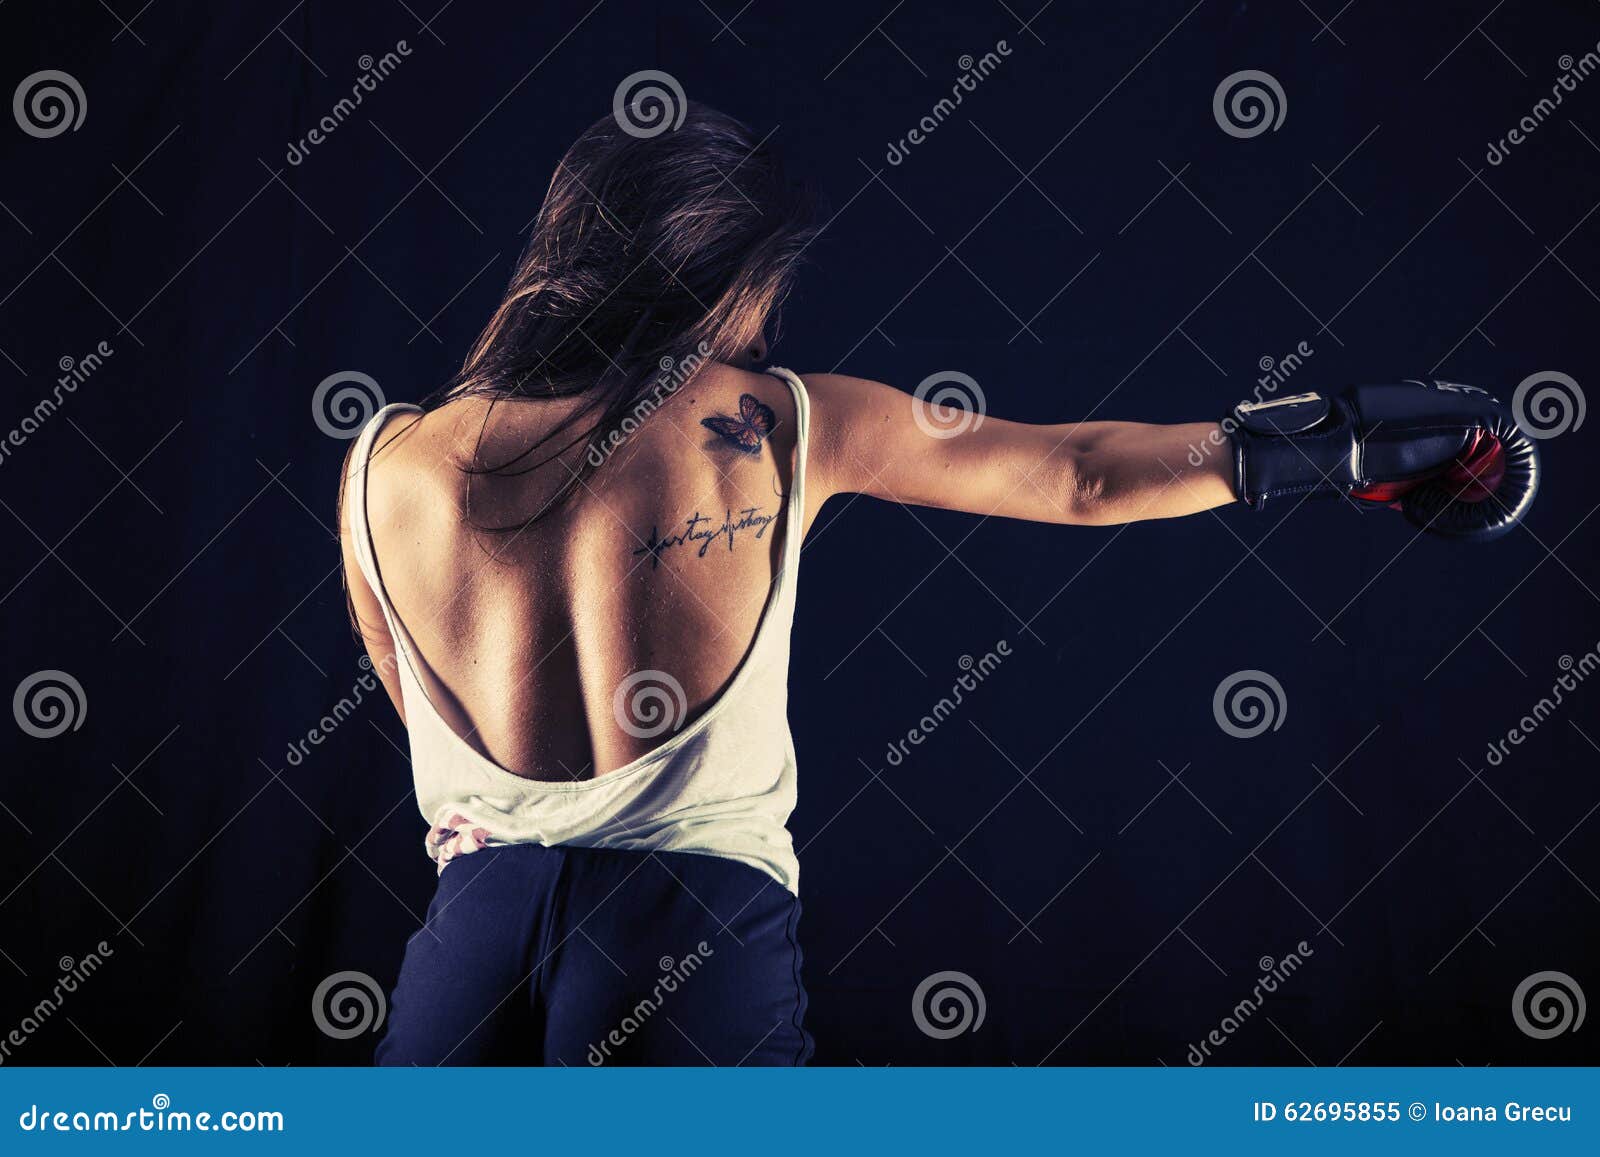 strong young woman boxing performing a jab kick